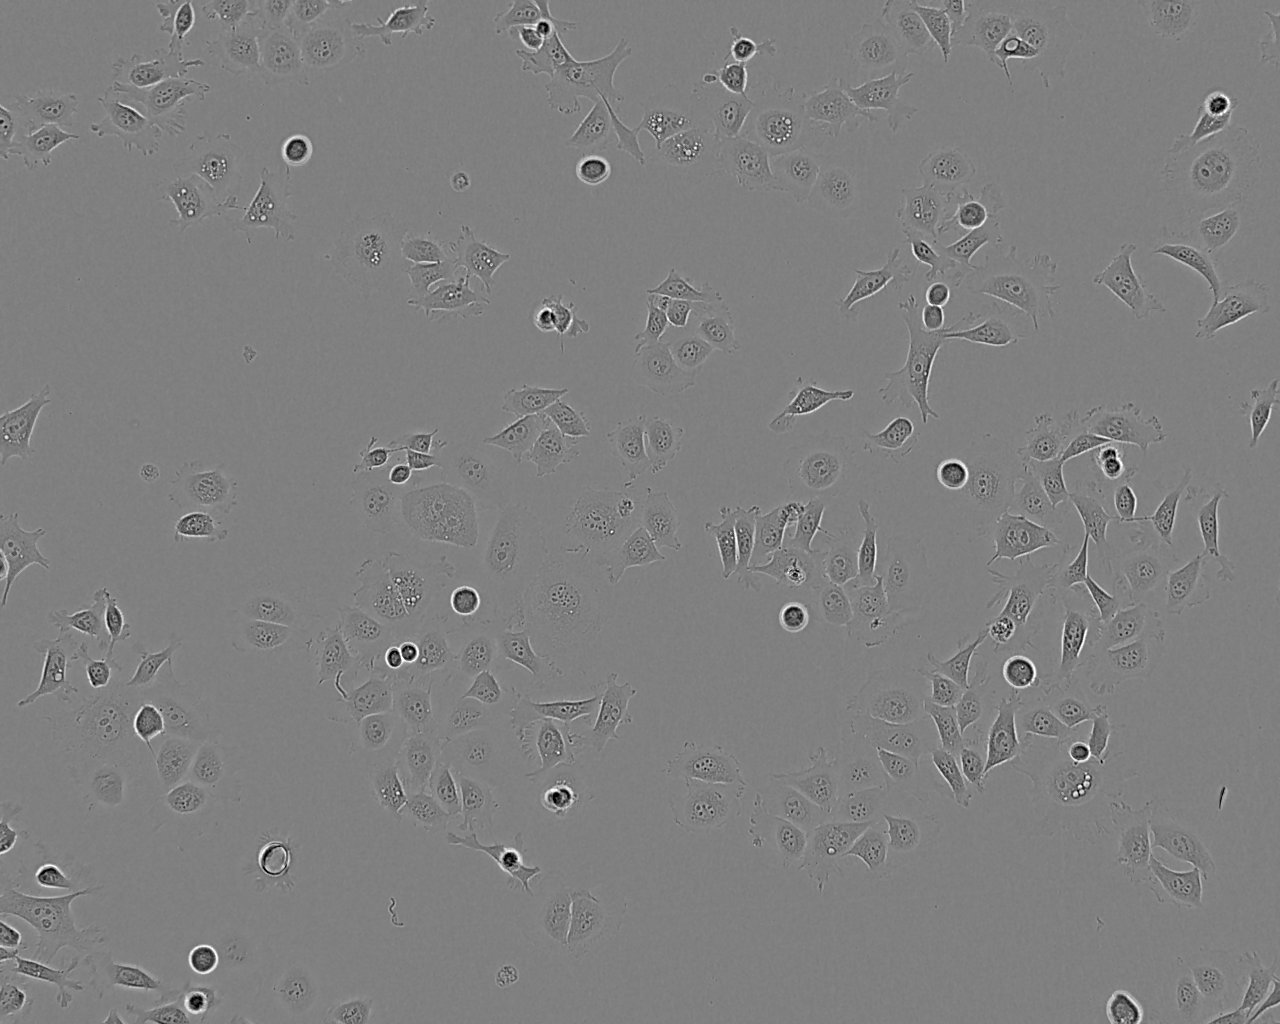 NCI-H676B Cells(赠送Str鉴定报告)|人肺腺癌细胞,NCI-H676B Cells